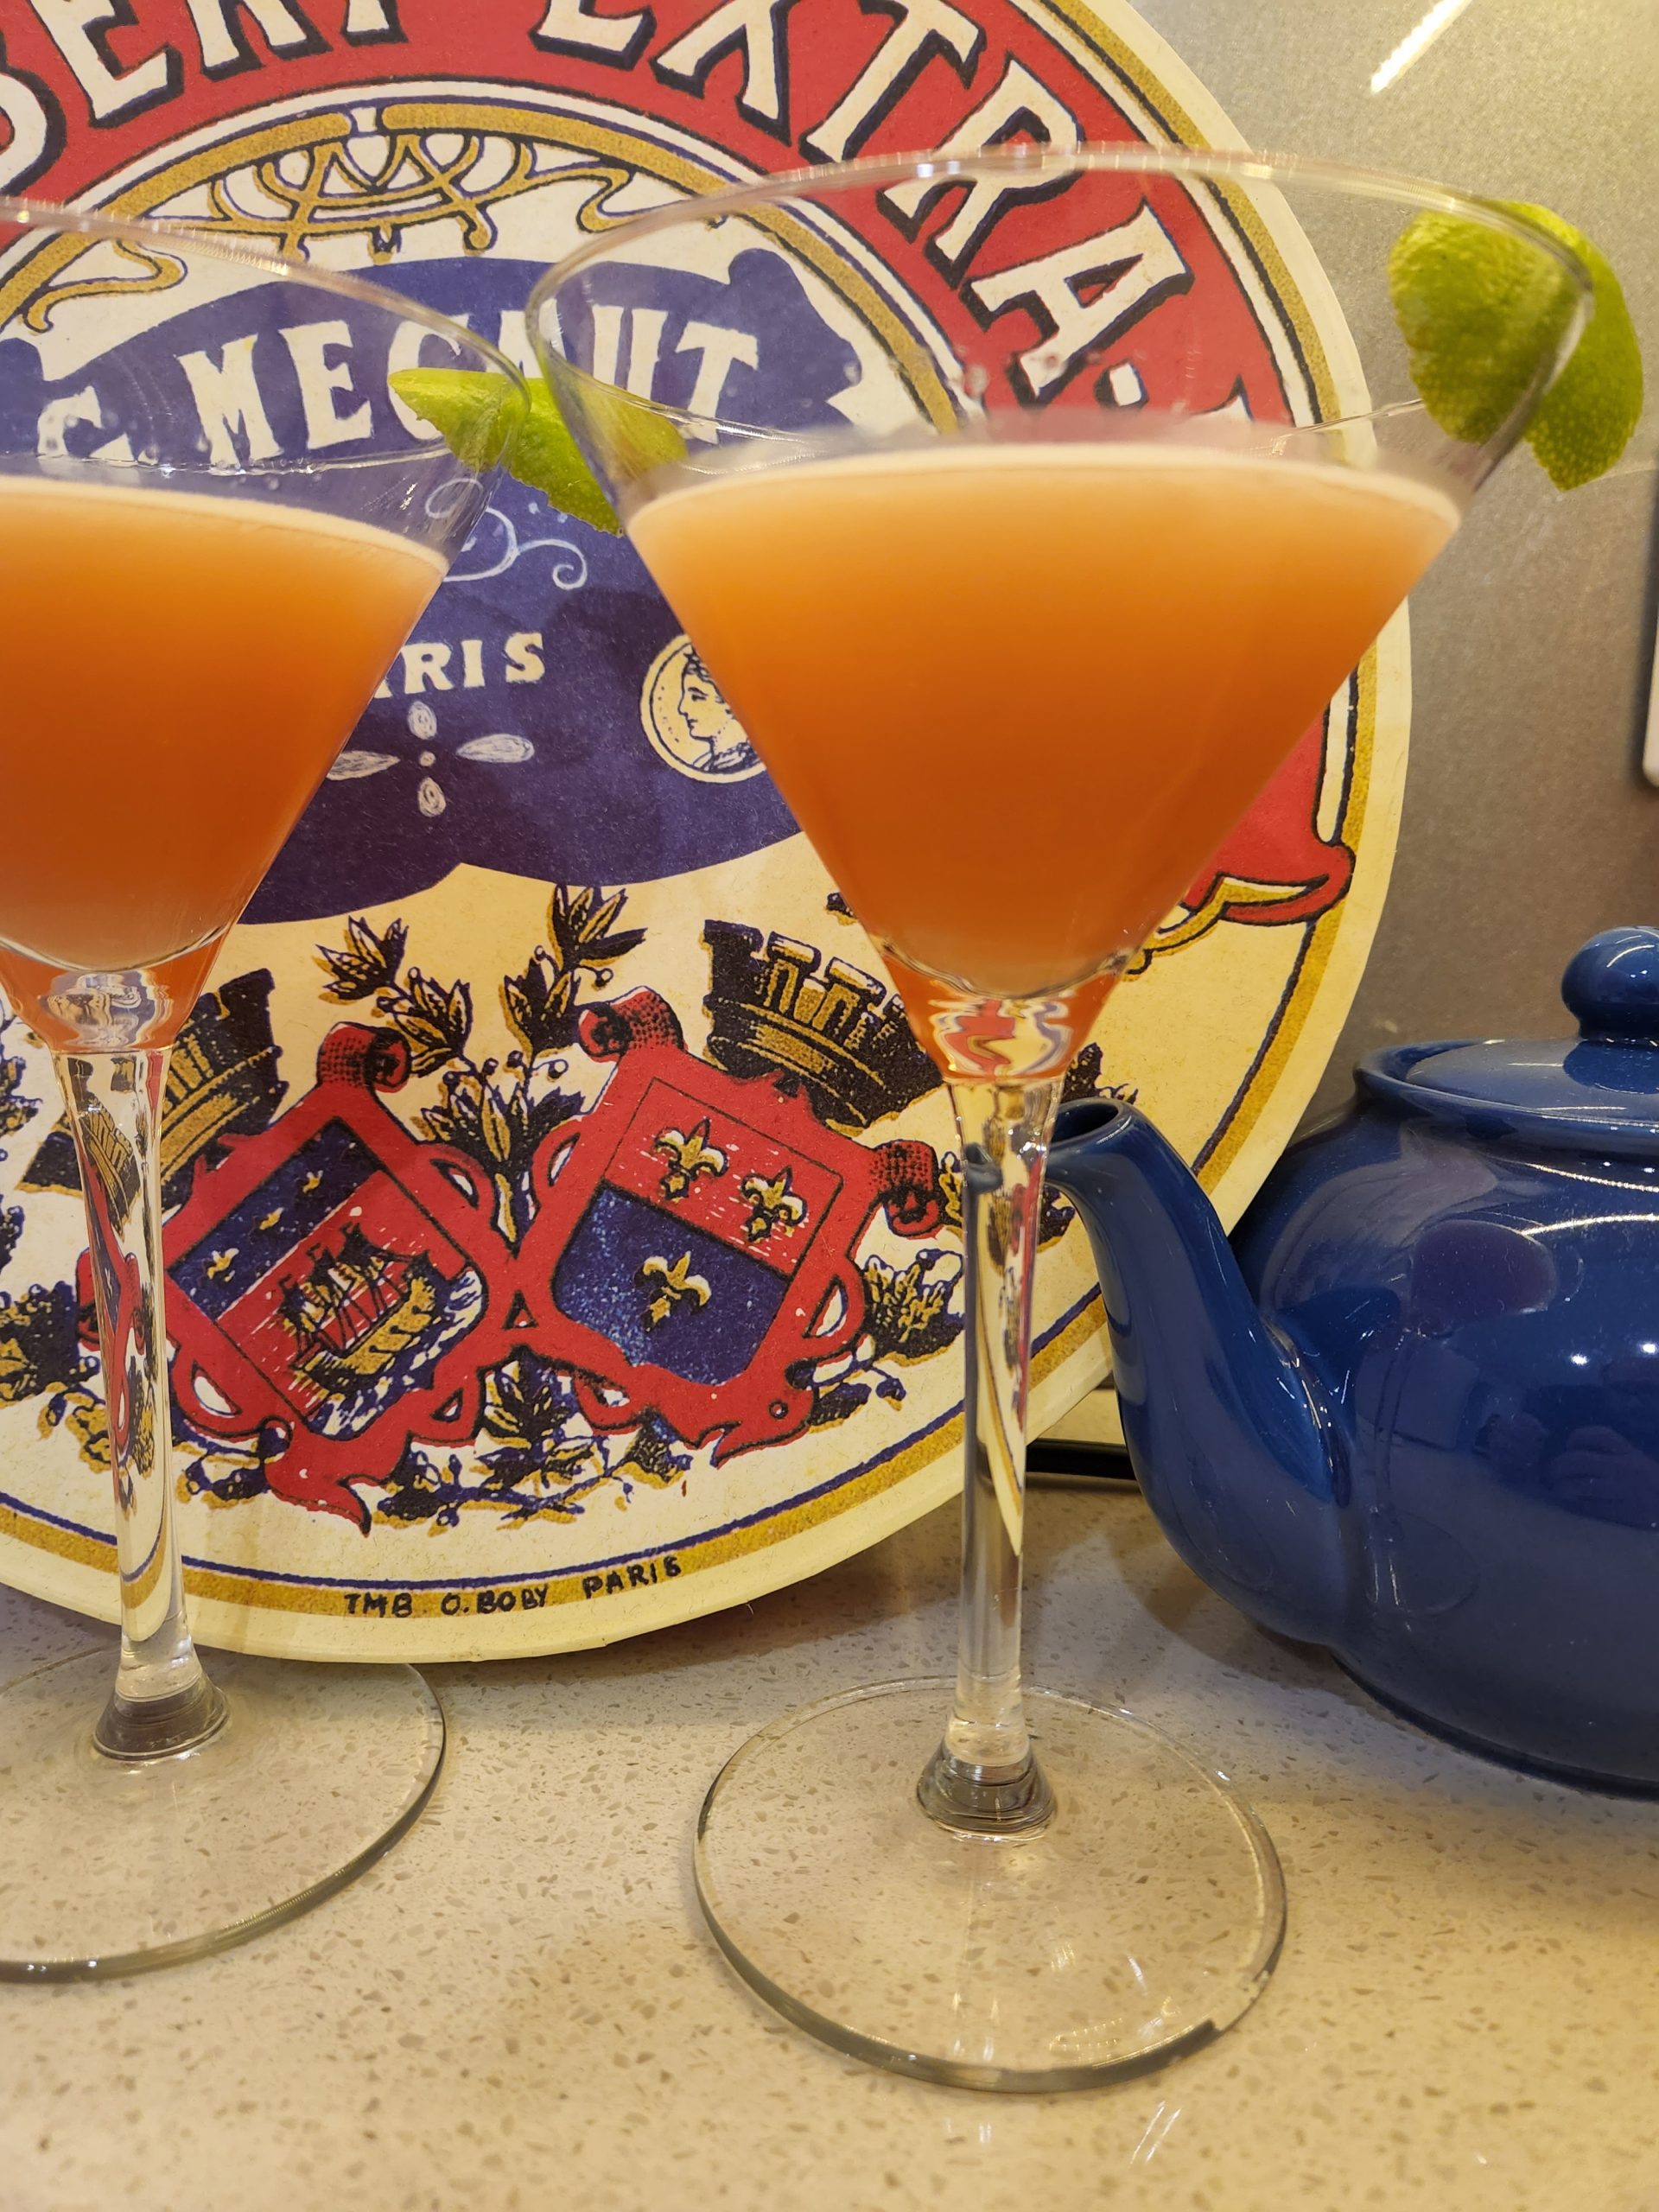 Two Halekulani cocktails in Martini glasses.